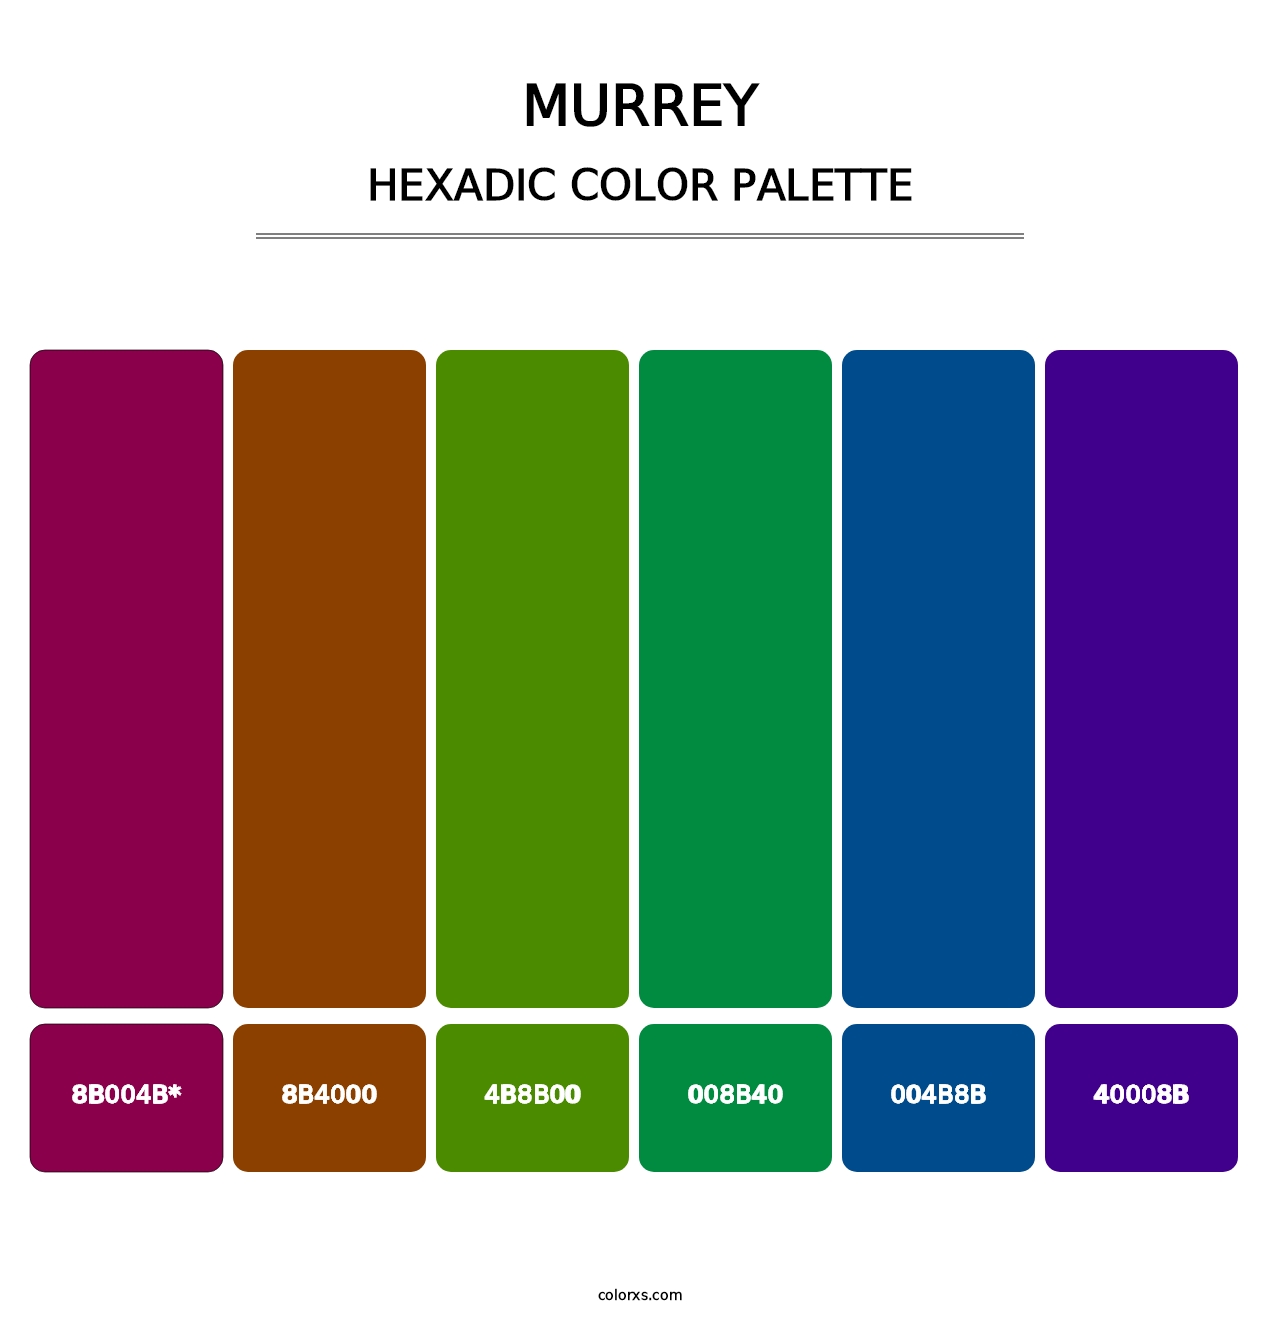 Murrey - Hexadic Color Palette